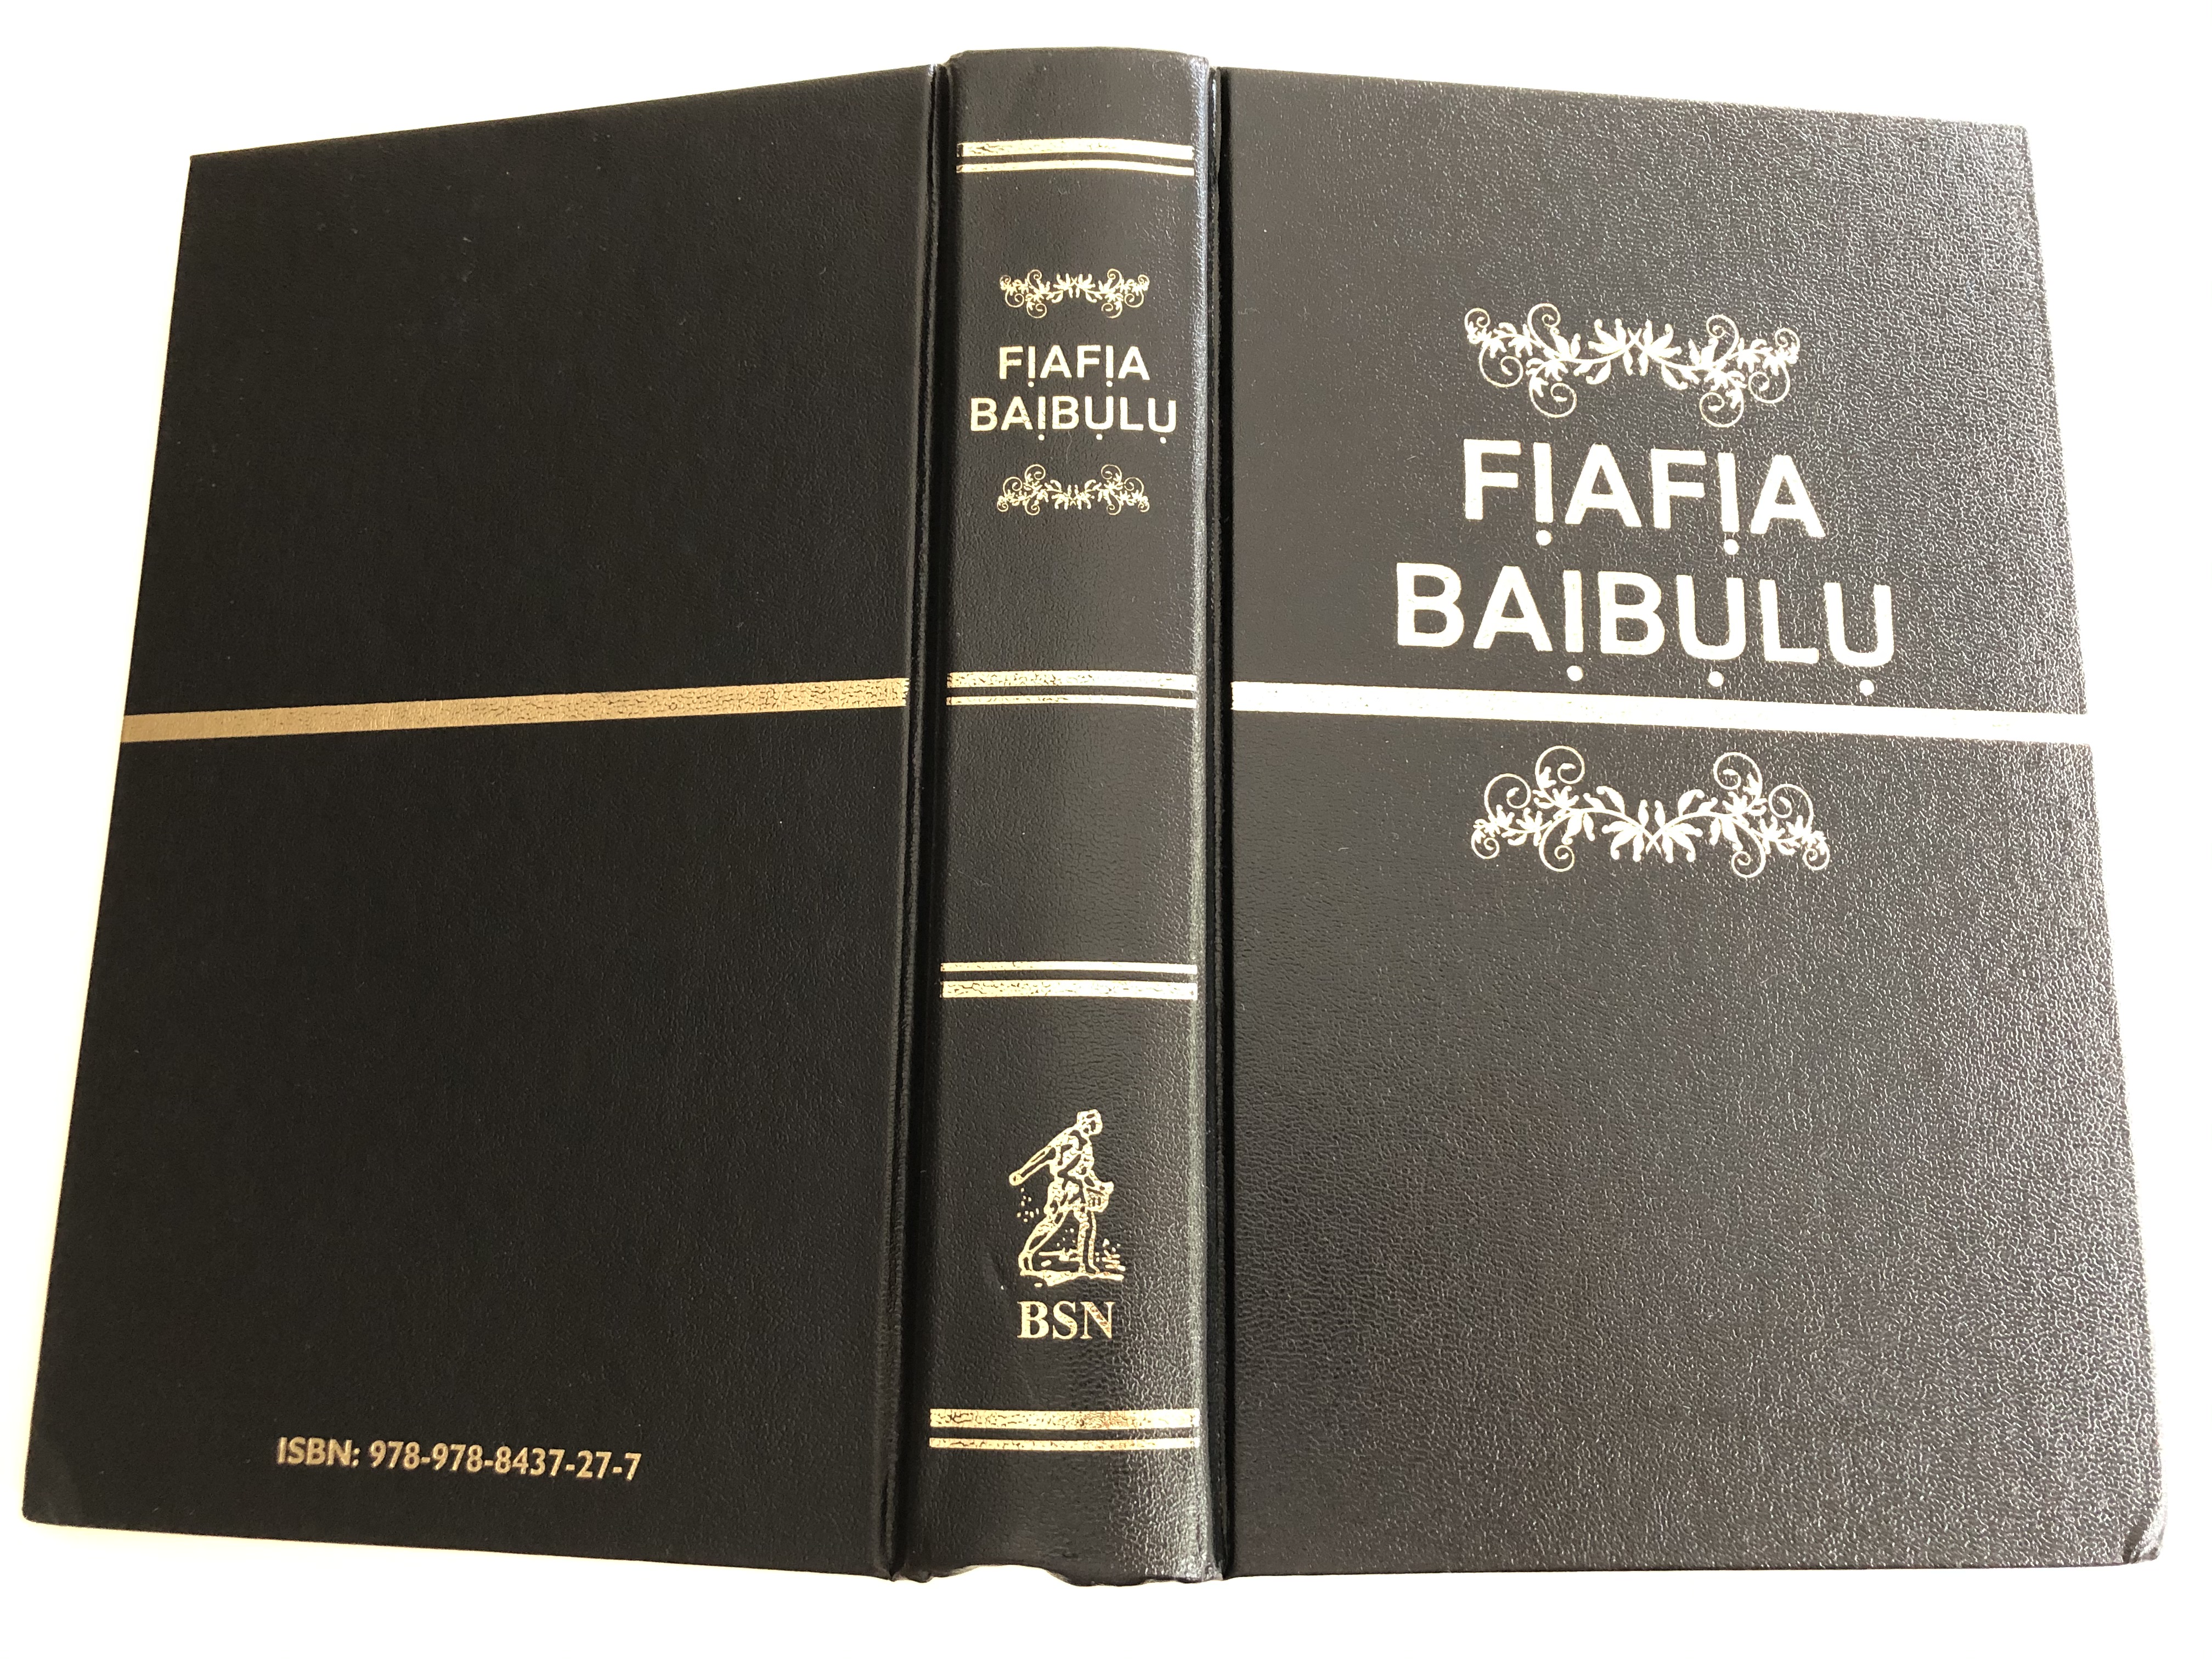 -fiafia-baibulu-the-holy-bible-in-kalabari-language-bible-society-of-nigeria-2017-hardcover-black-kalabari-common-language-bible-20-.jpg